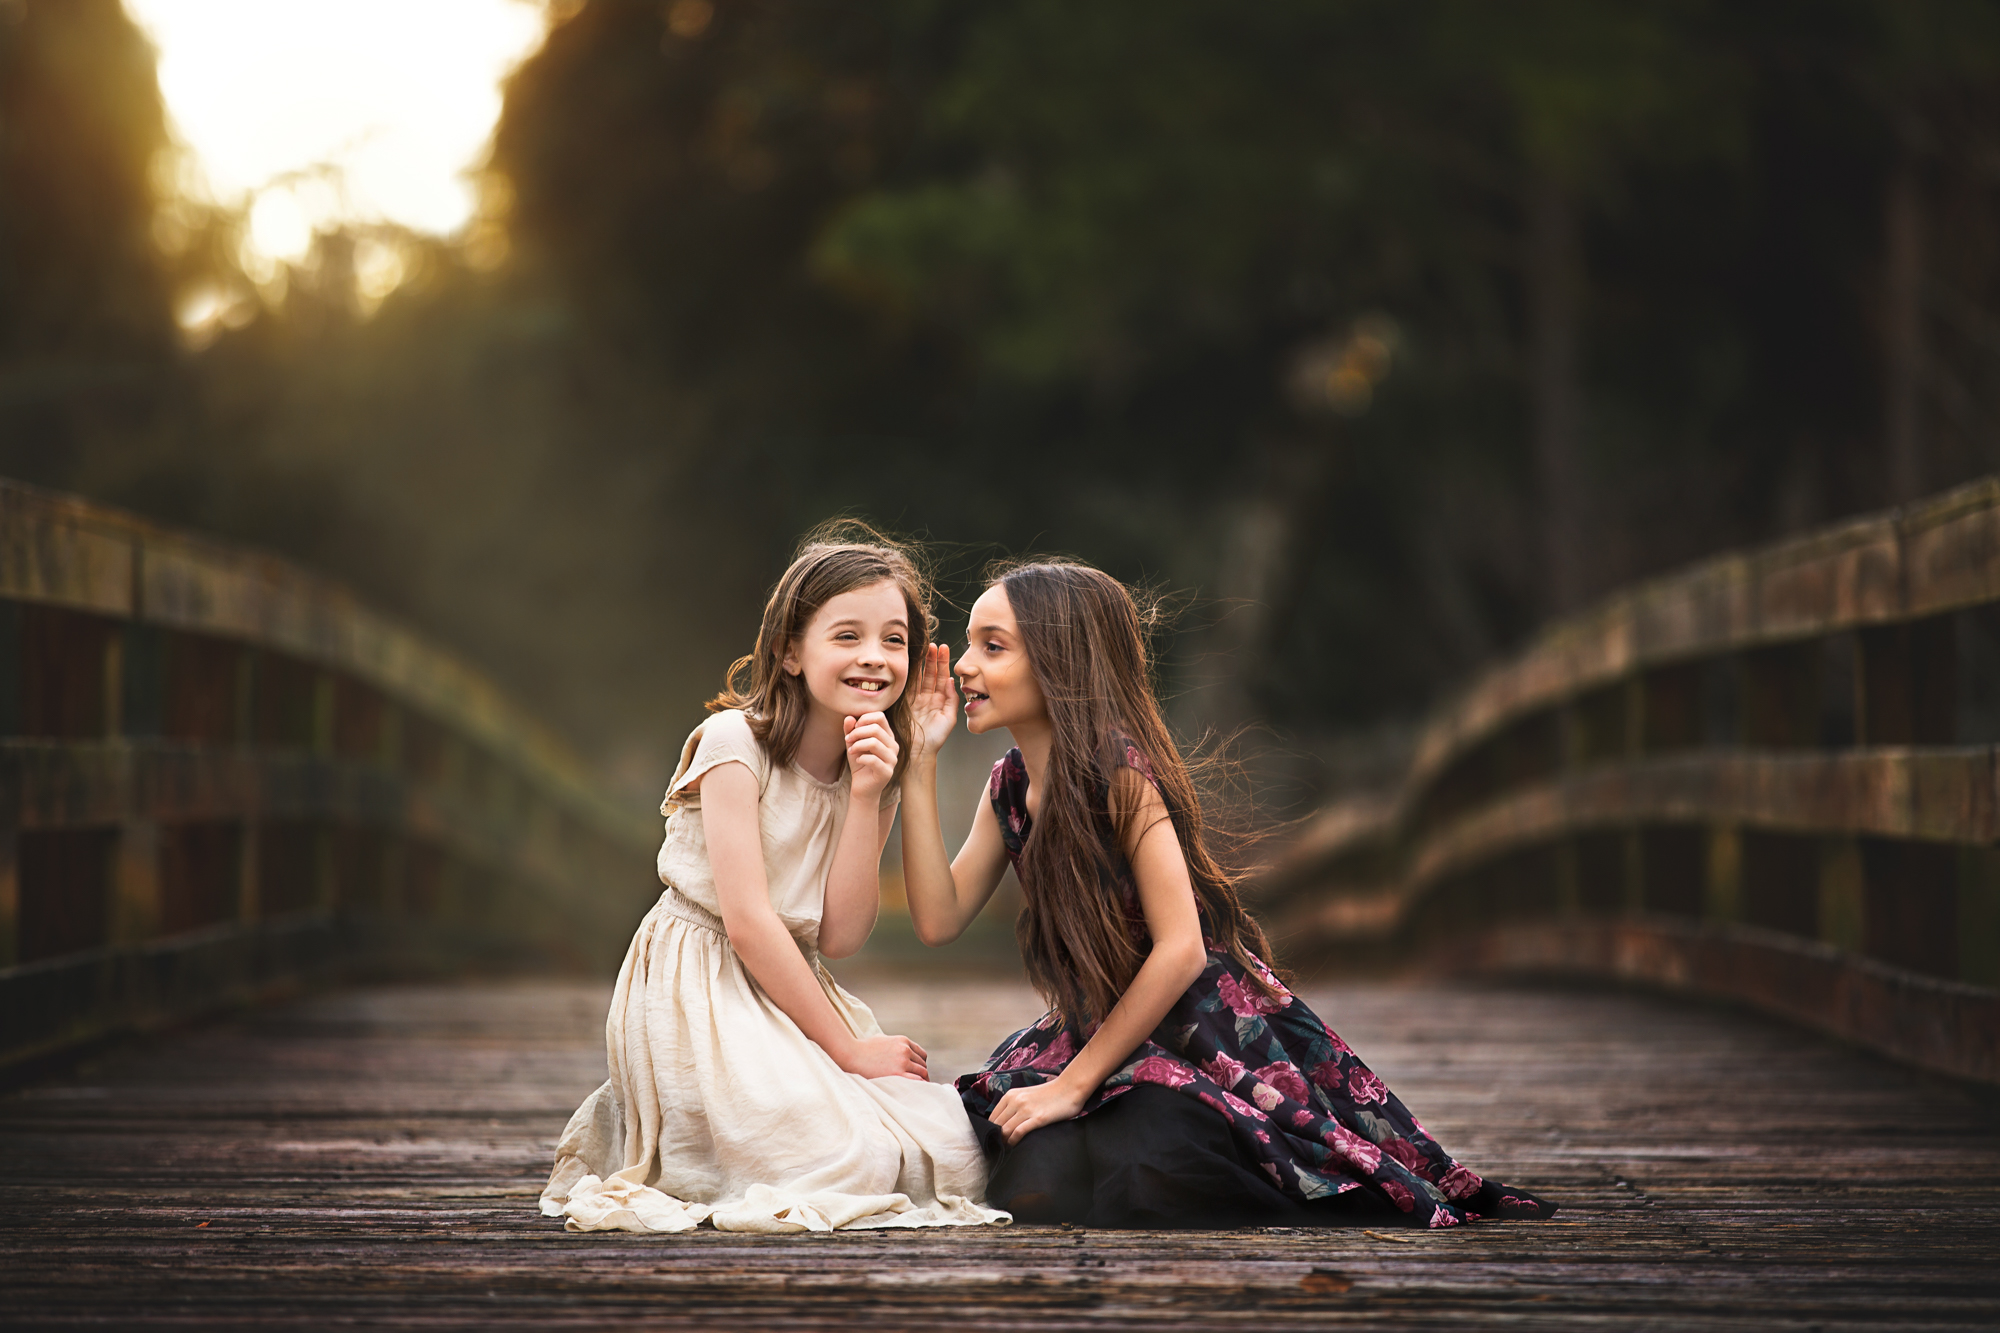 Two girls talking secrets on Discovery Green park in Houston, TX